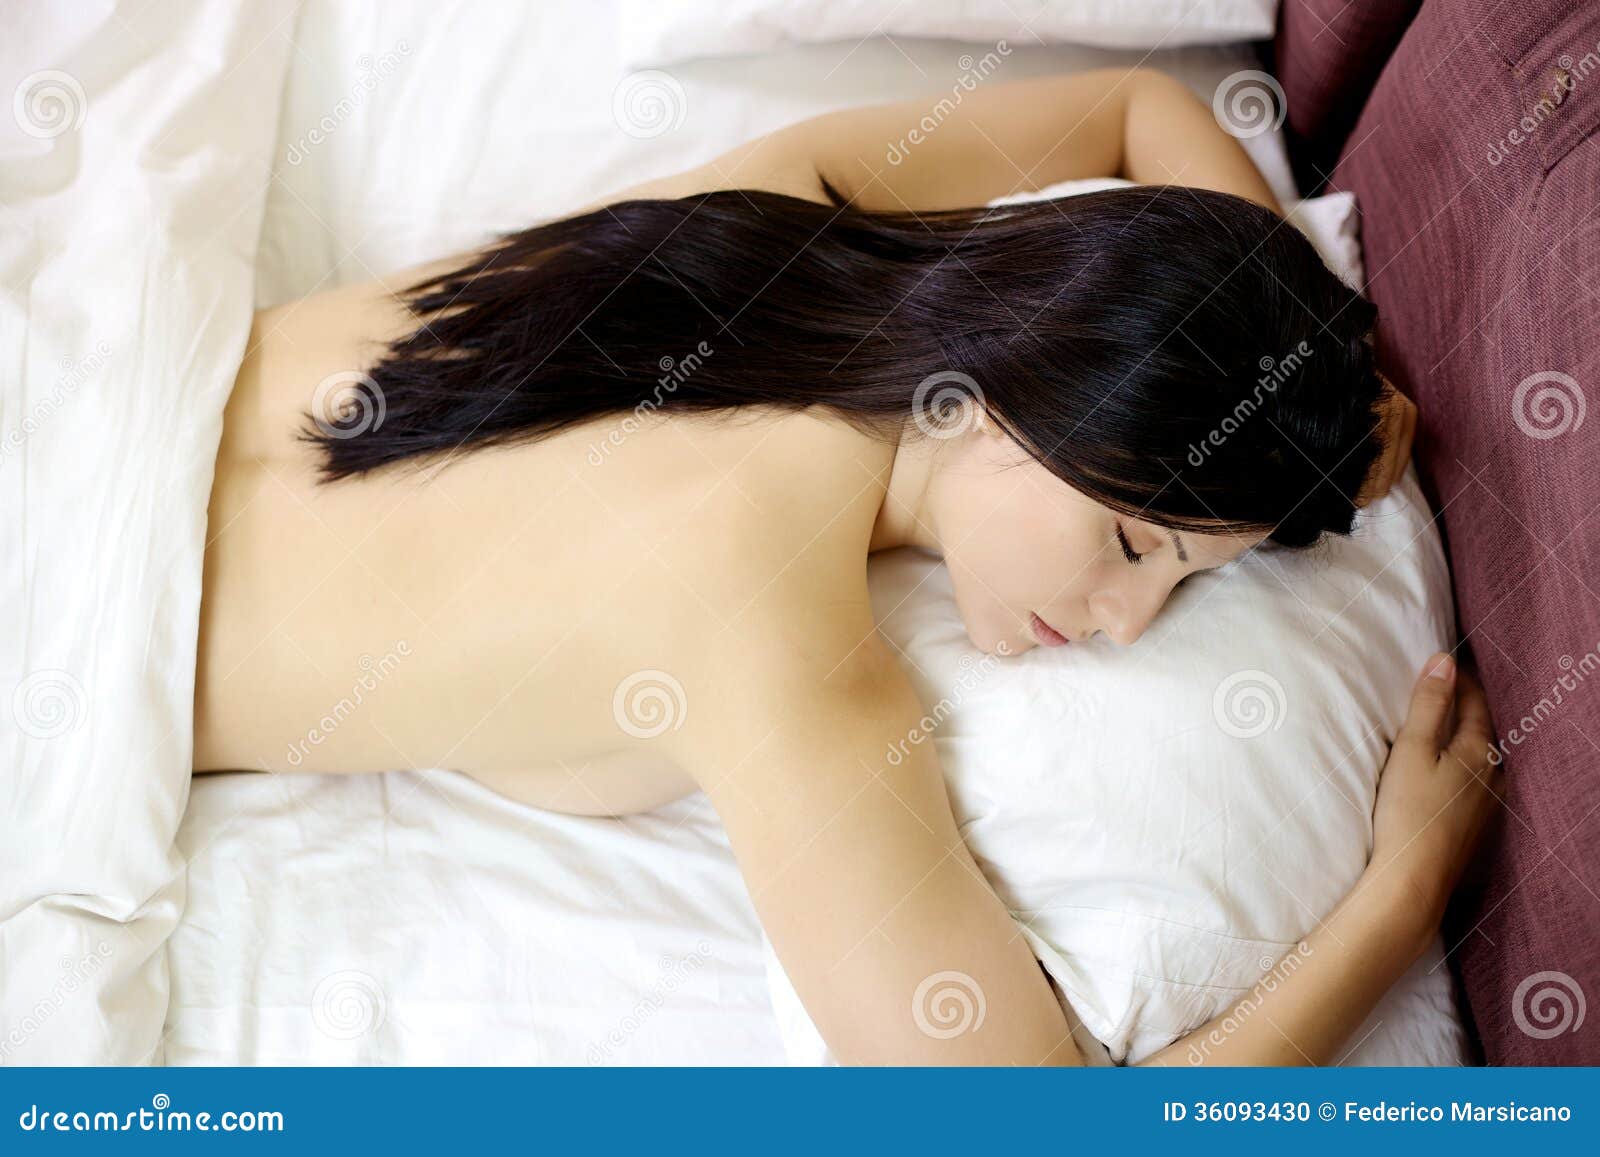 Cute naked women sleeping on bed